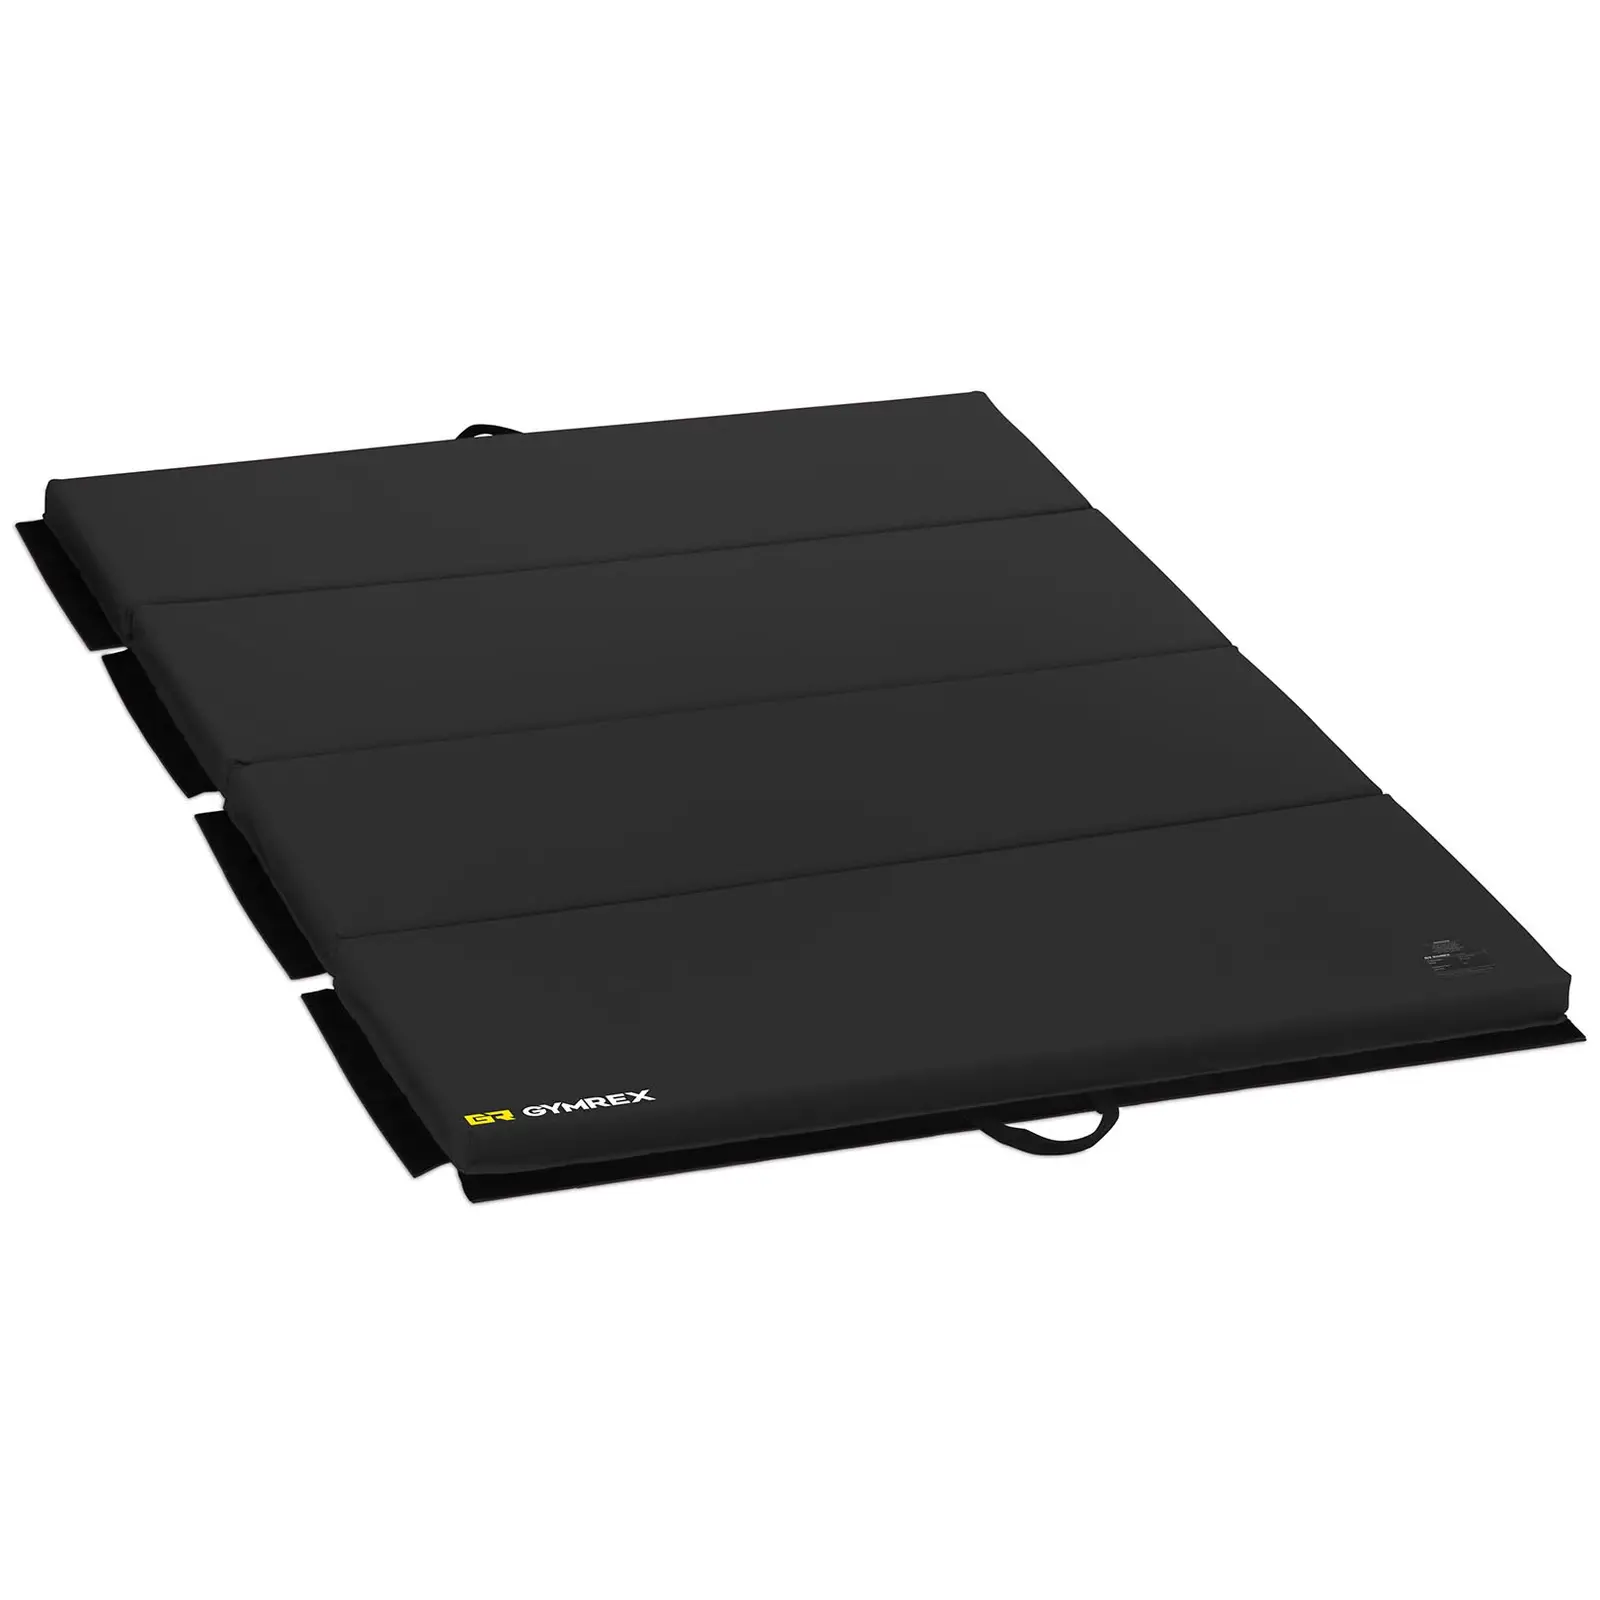 Gymnastics Mat - 200 x 120 x 5 cm - folding - Black - capacity up to 170 kg